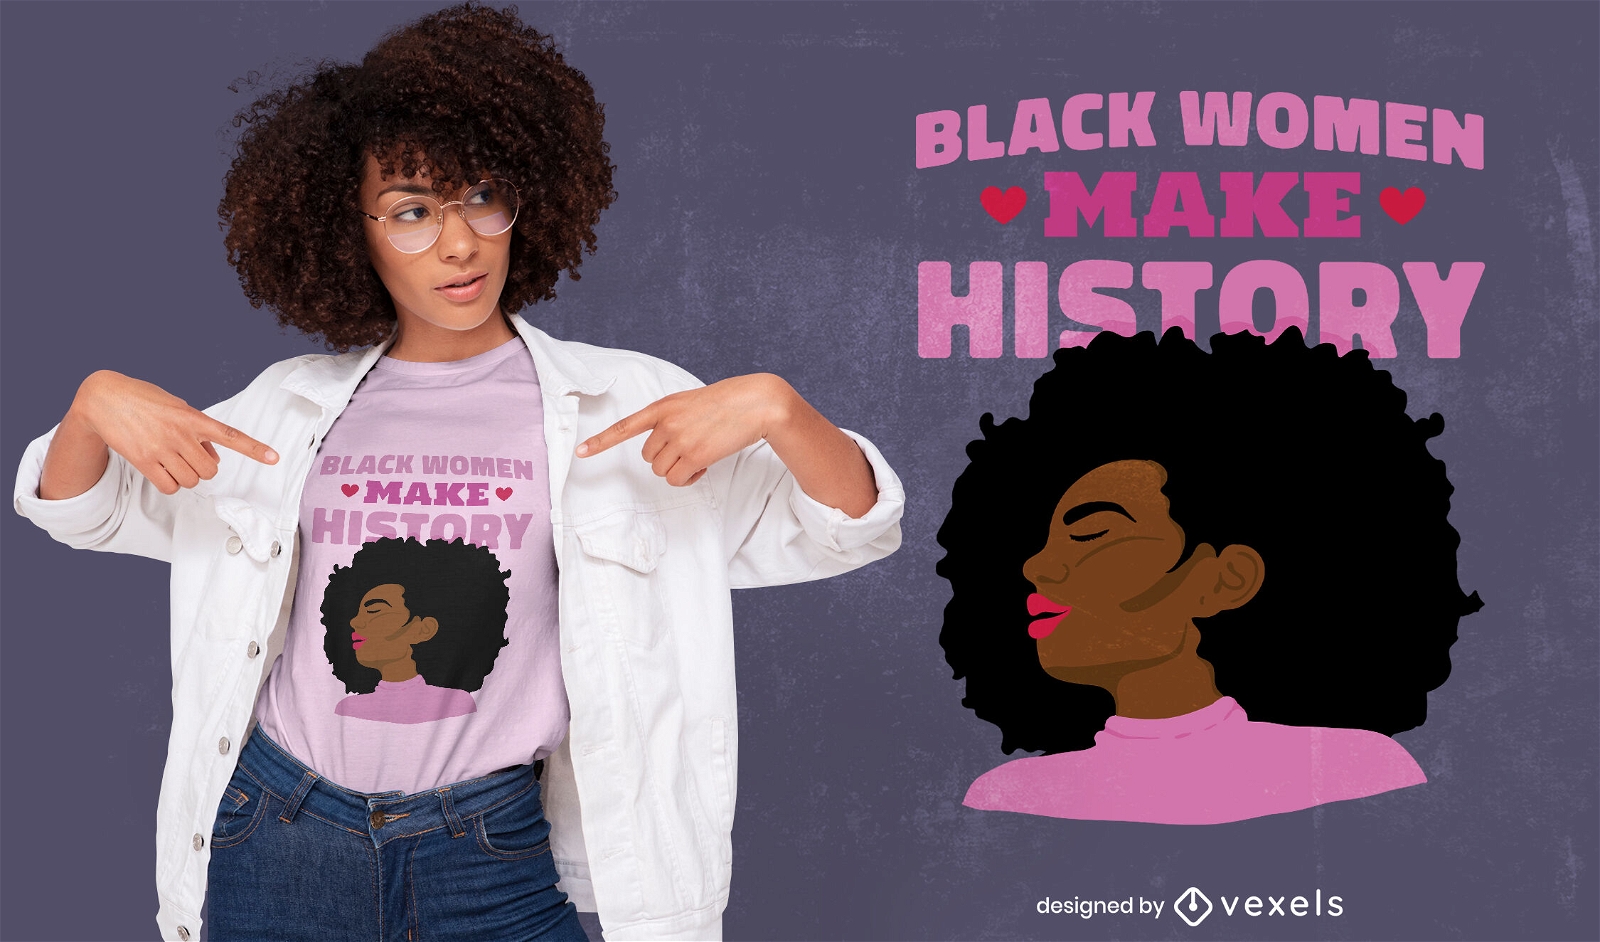 Dise?o de camiseta de cita feminista de mujeres negras.